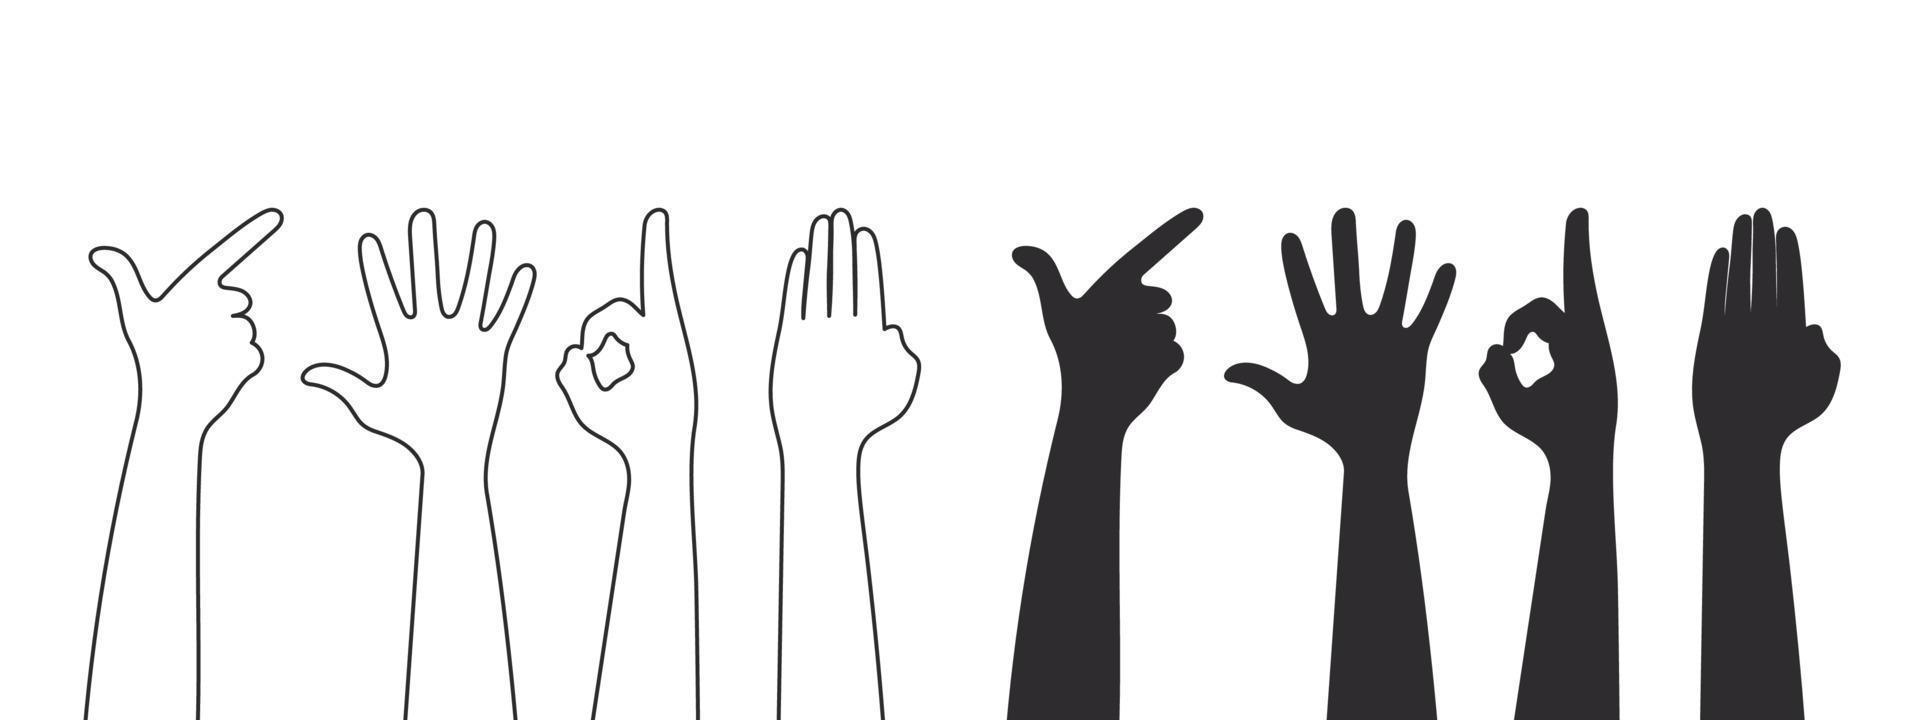 Hand gesture silhouettes. Teamwork hands, collaboration, voting hands. Vector illustration